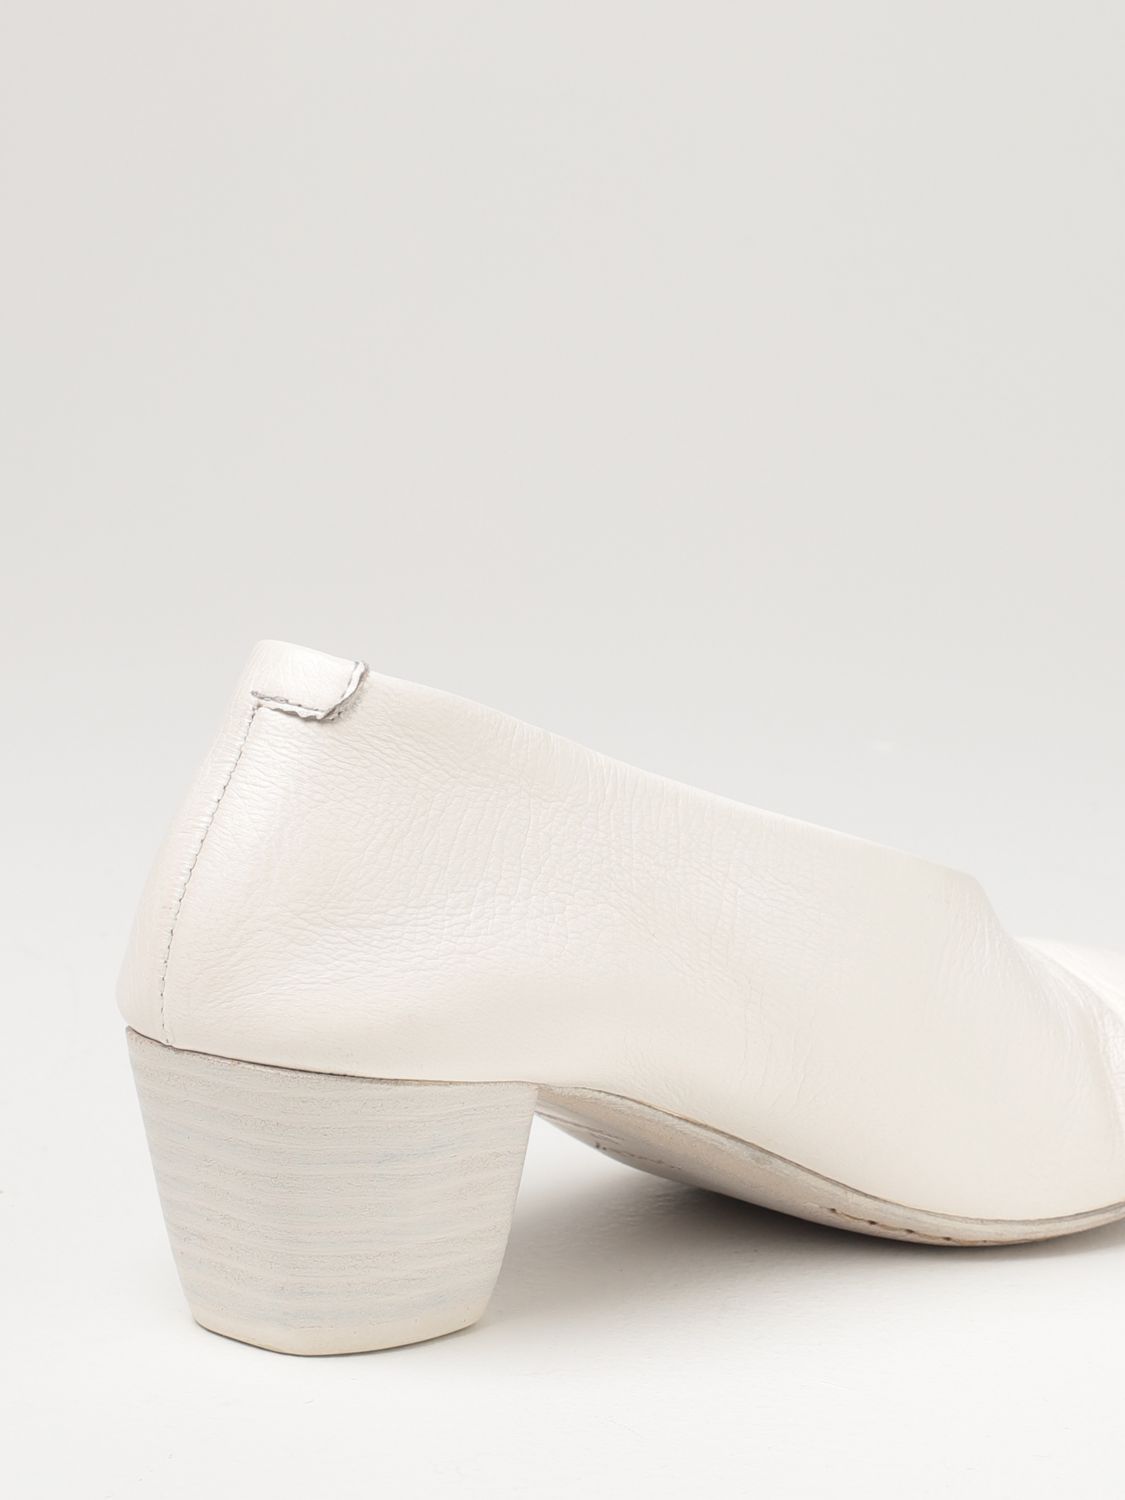 Escarpins Marsèll: Chaussures femme Marsell blanc 3